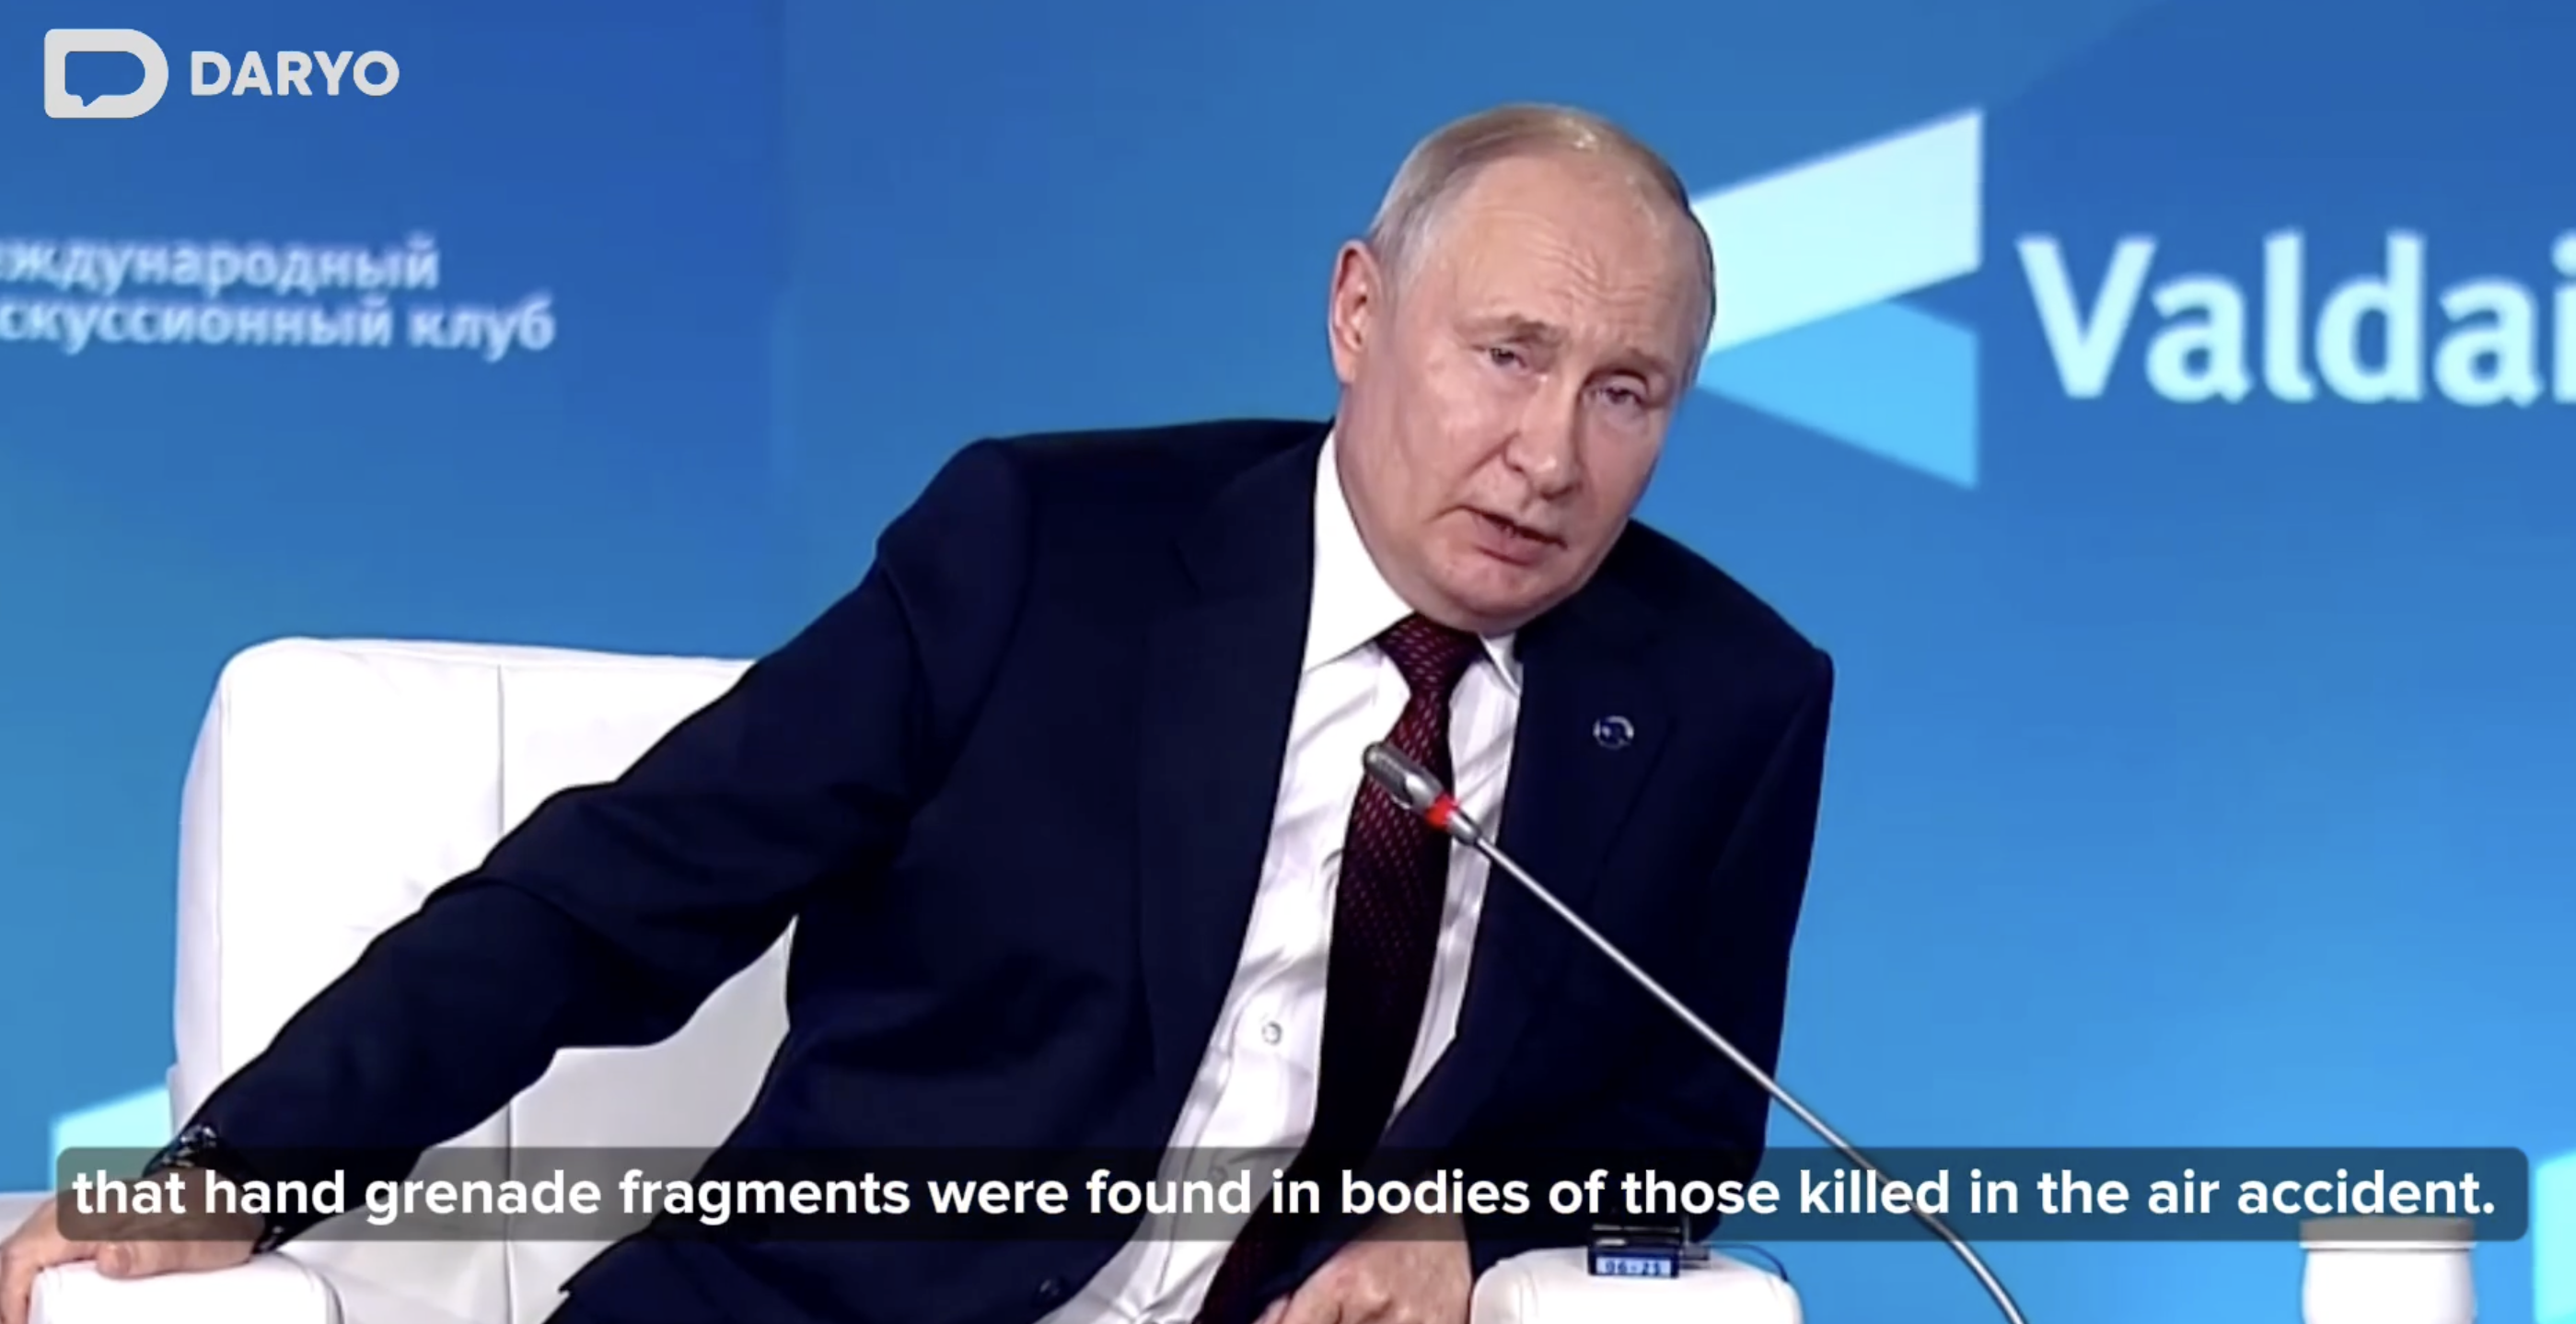 Vladimir Putin claims handgrenades caused Wagner PMC plane crash